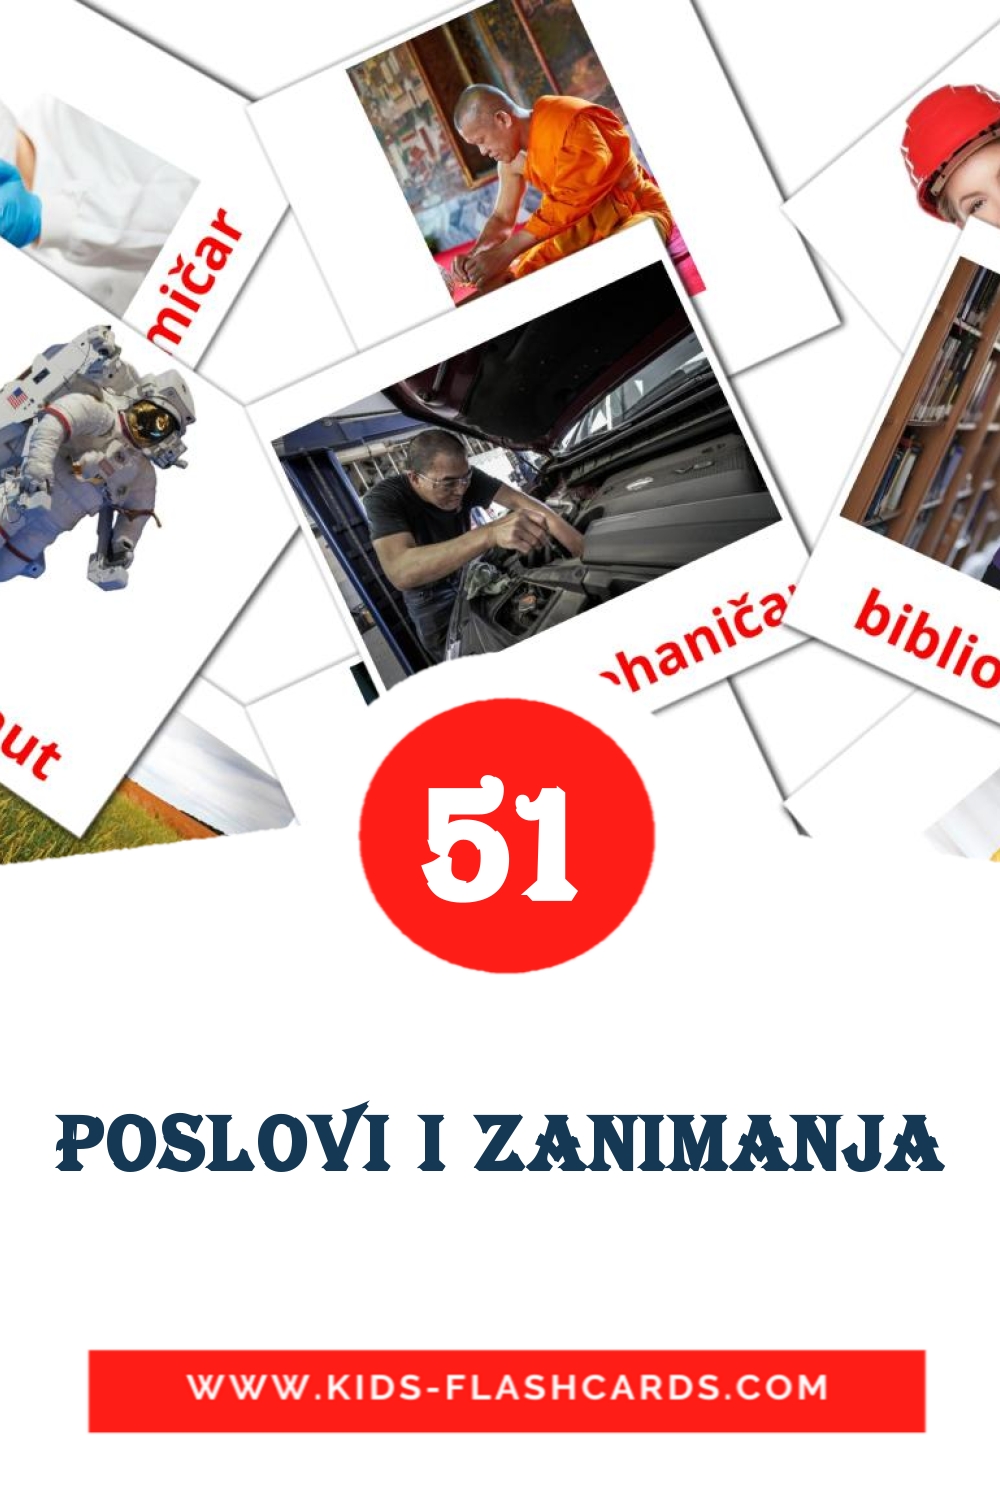 51 carte illustrate di Poslovi i zanimanja per la scuola materna in serbian